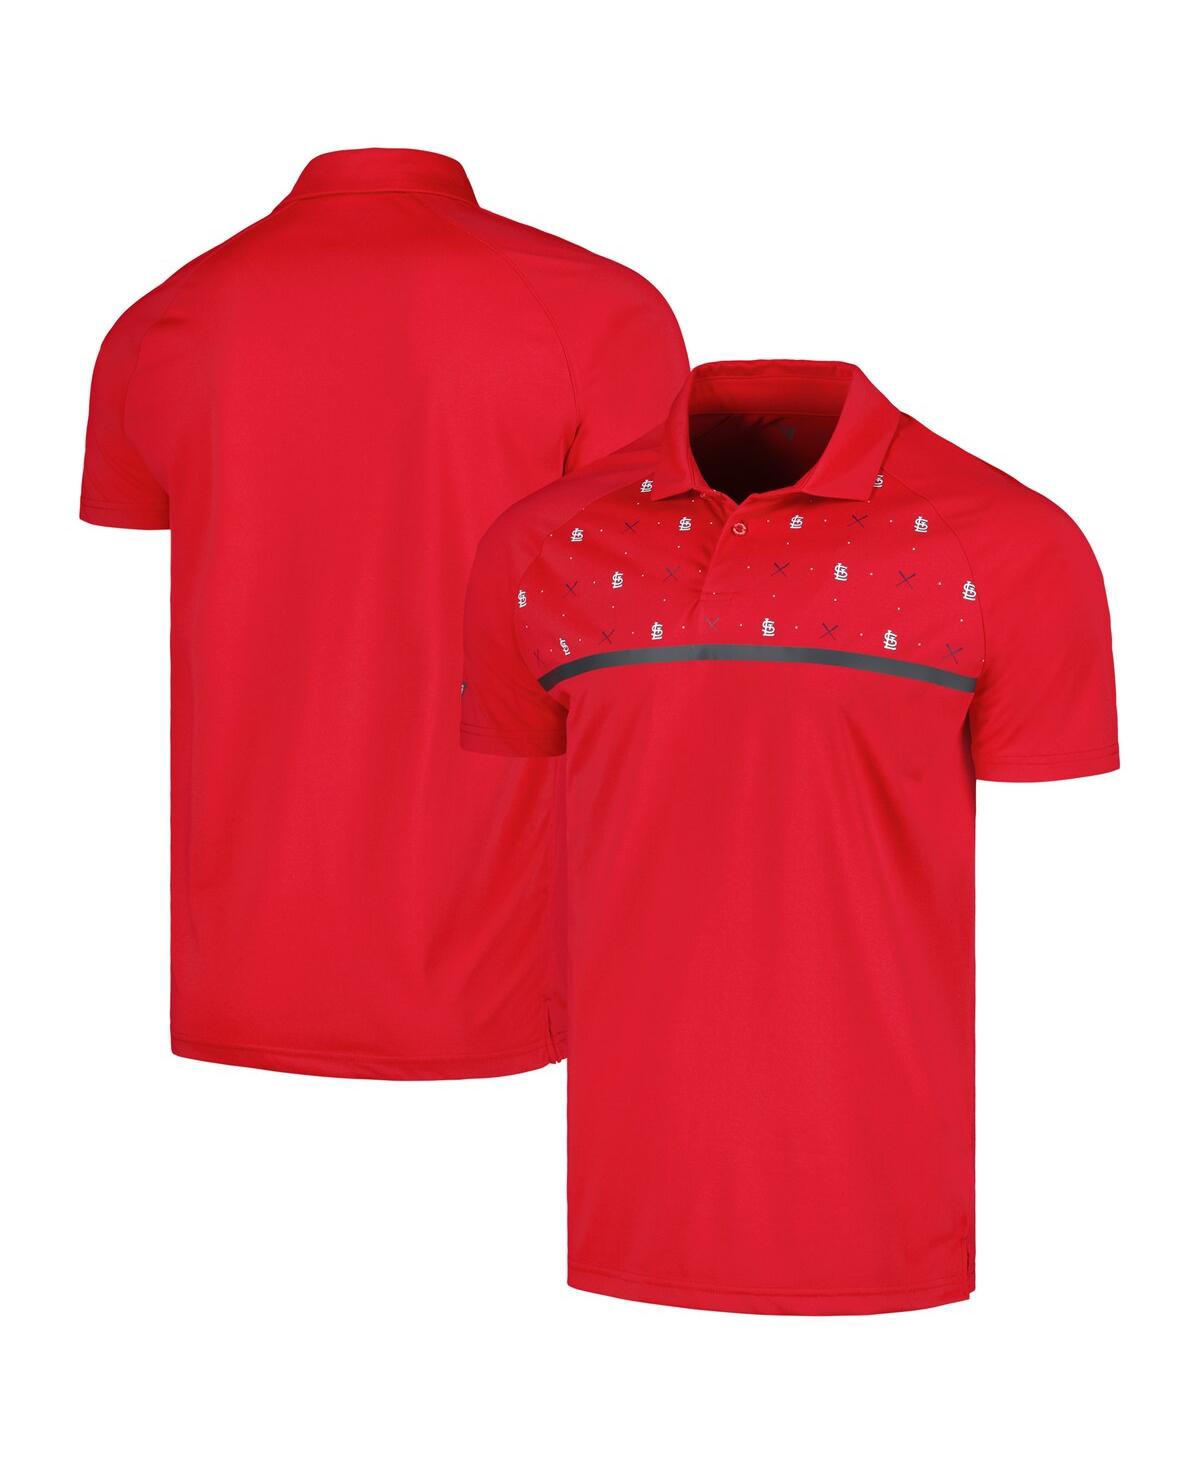 Men's LevelWear Red St. Louis Cardinals Sector Batter Up Raglan Polo Shirt - Red